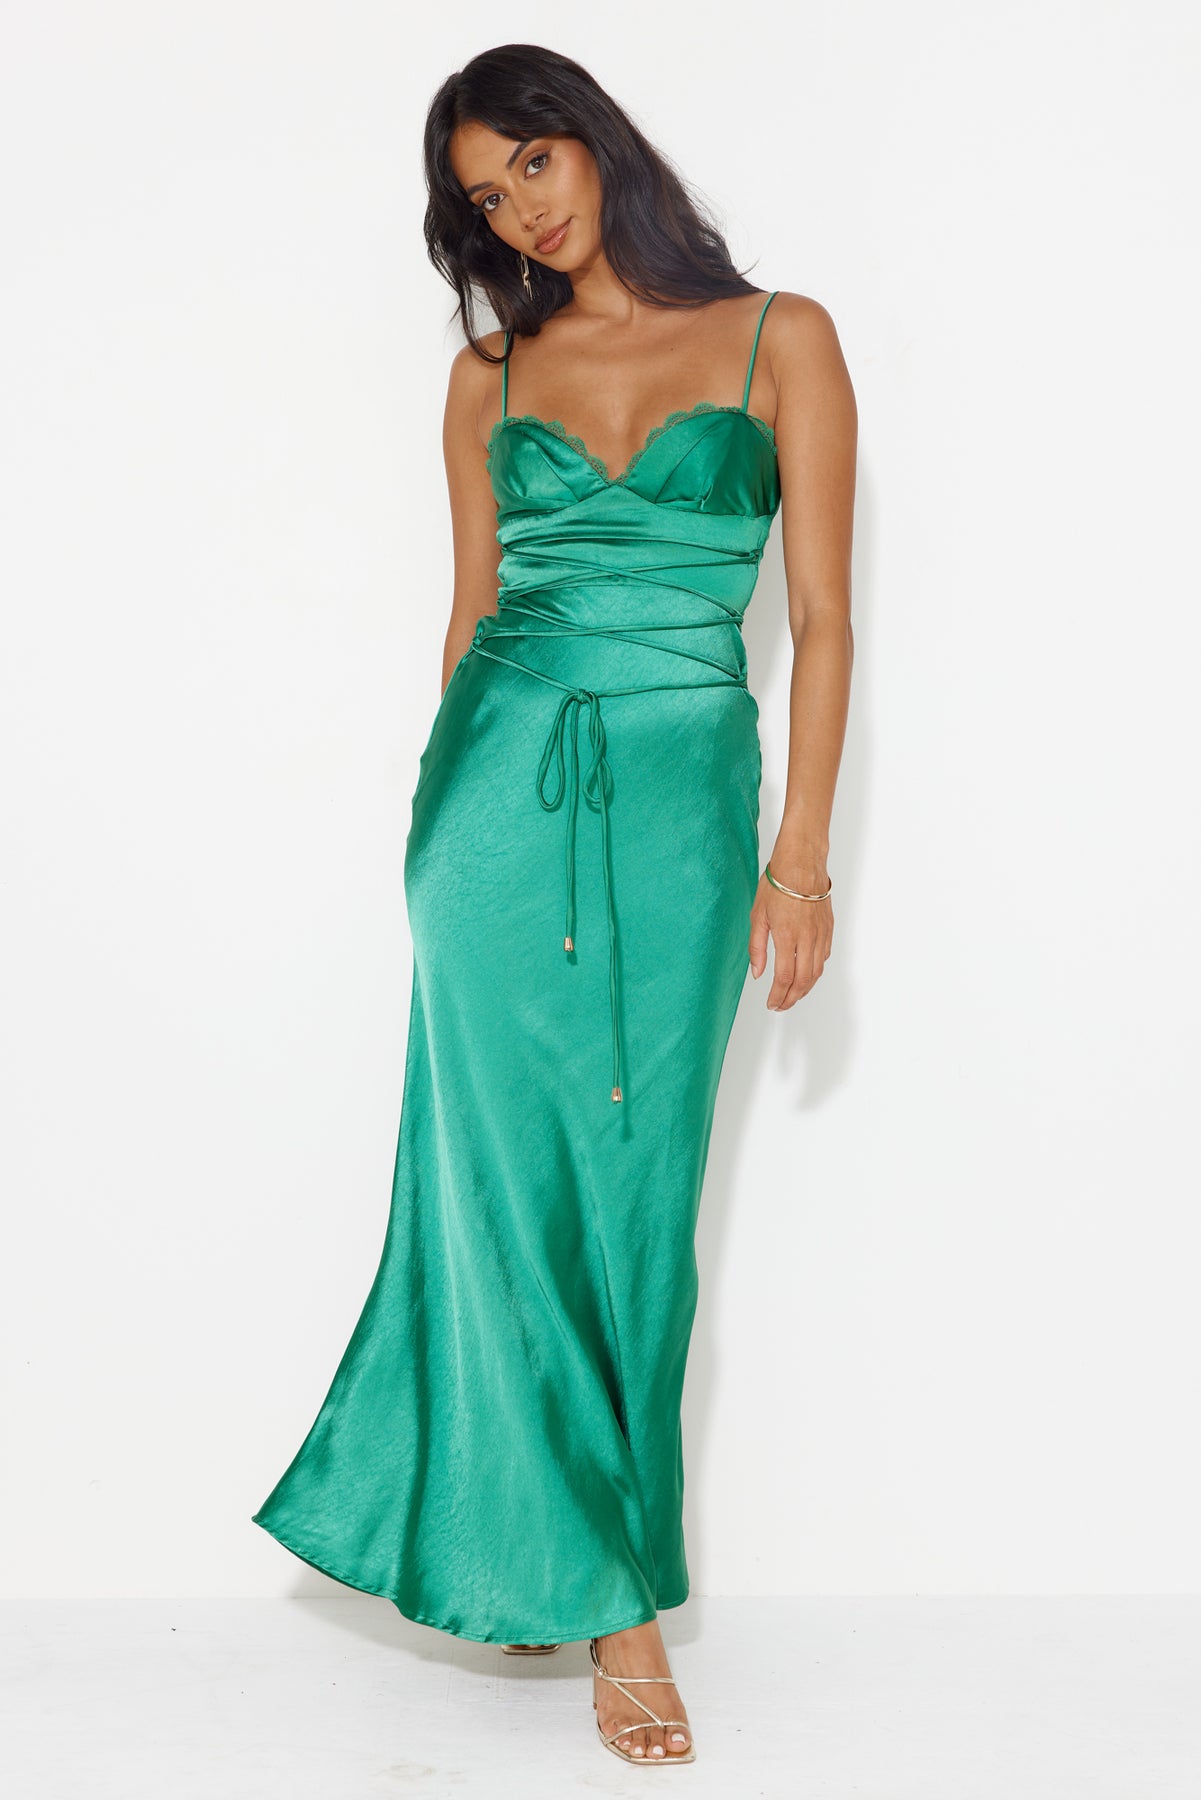 Shop Formal Dress - Dancing Pixie Satin Maxi Dress Green third image